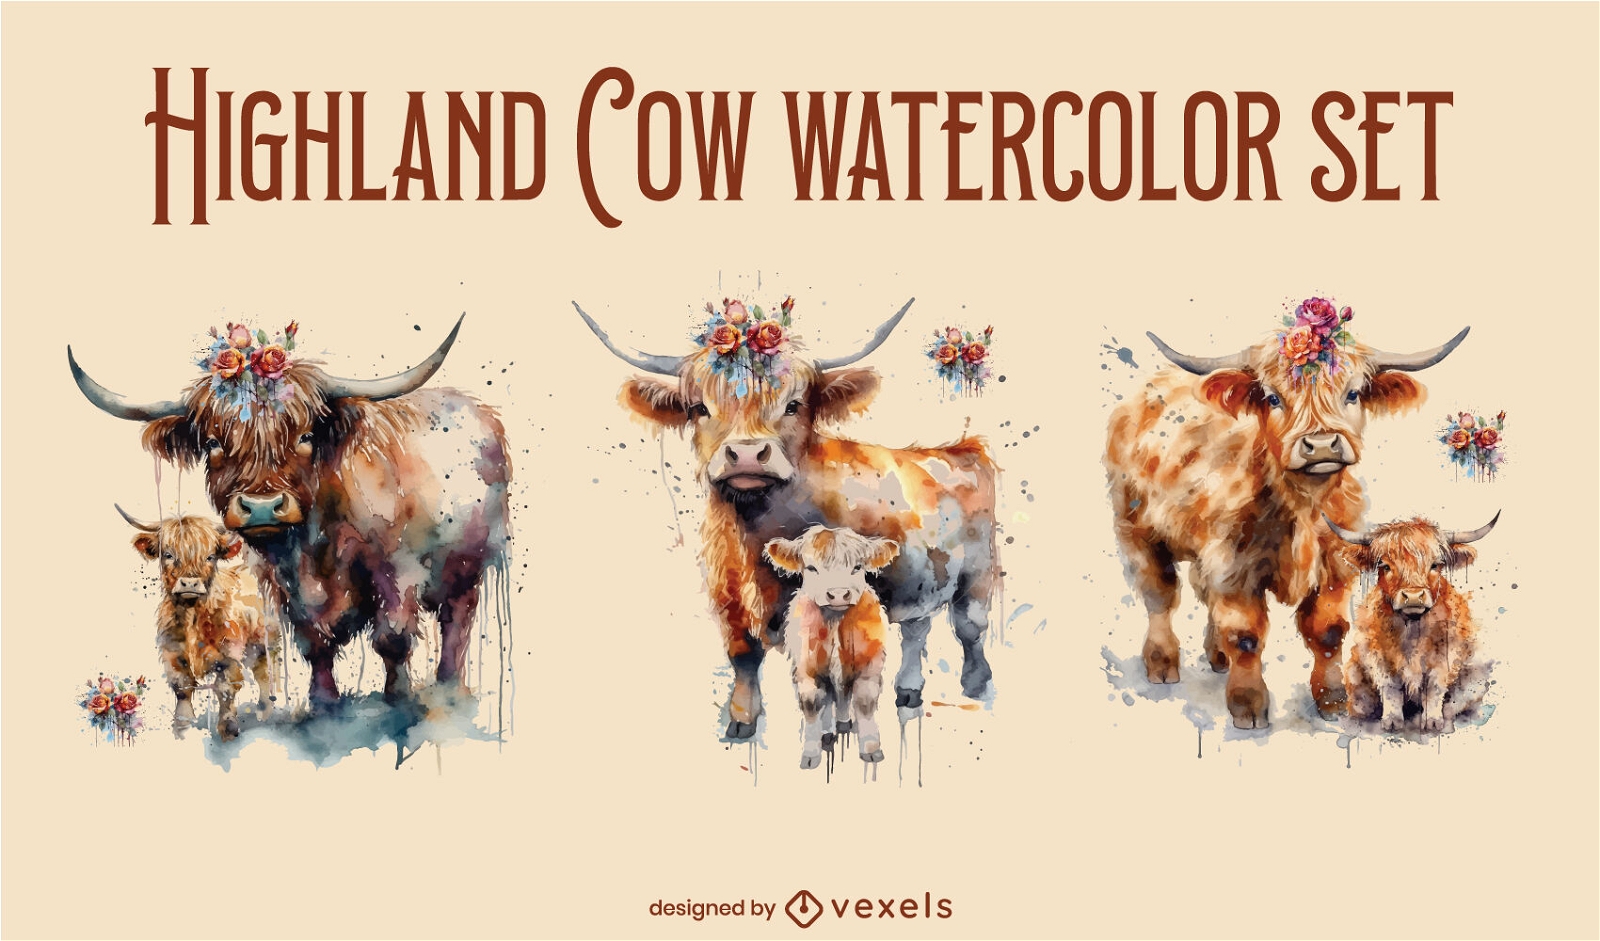 Highland cows watercolor set